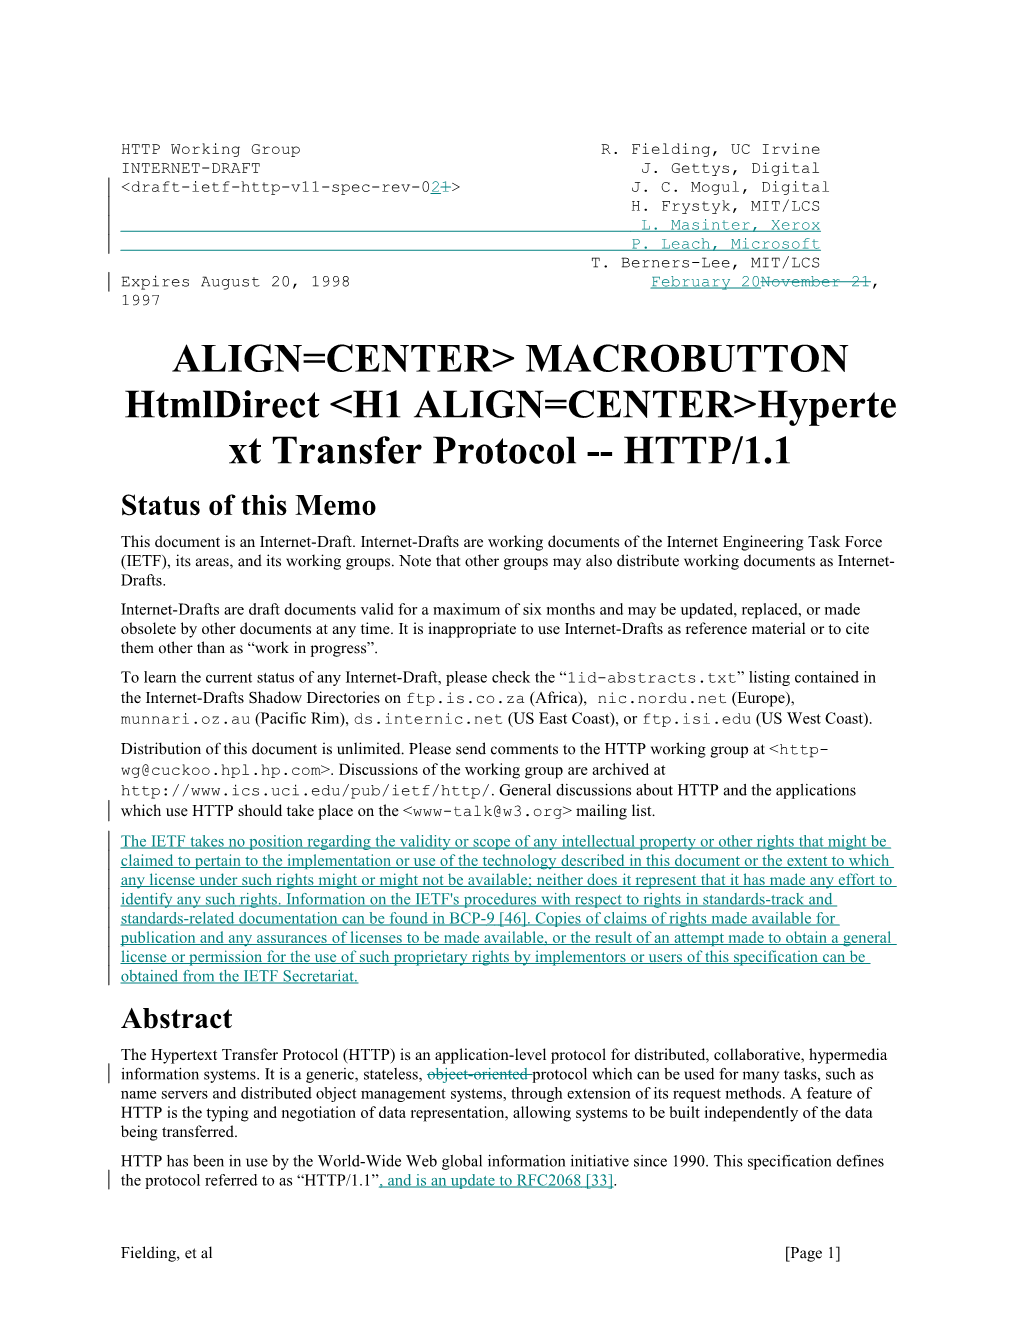 Hypertext Transfer Protocol HTTP/1.1